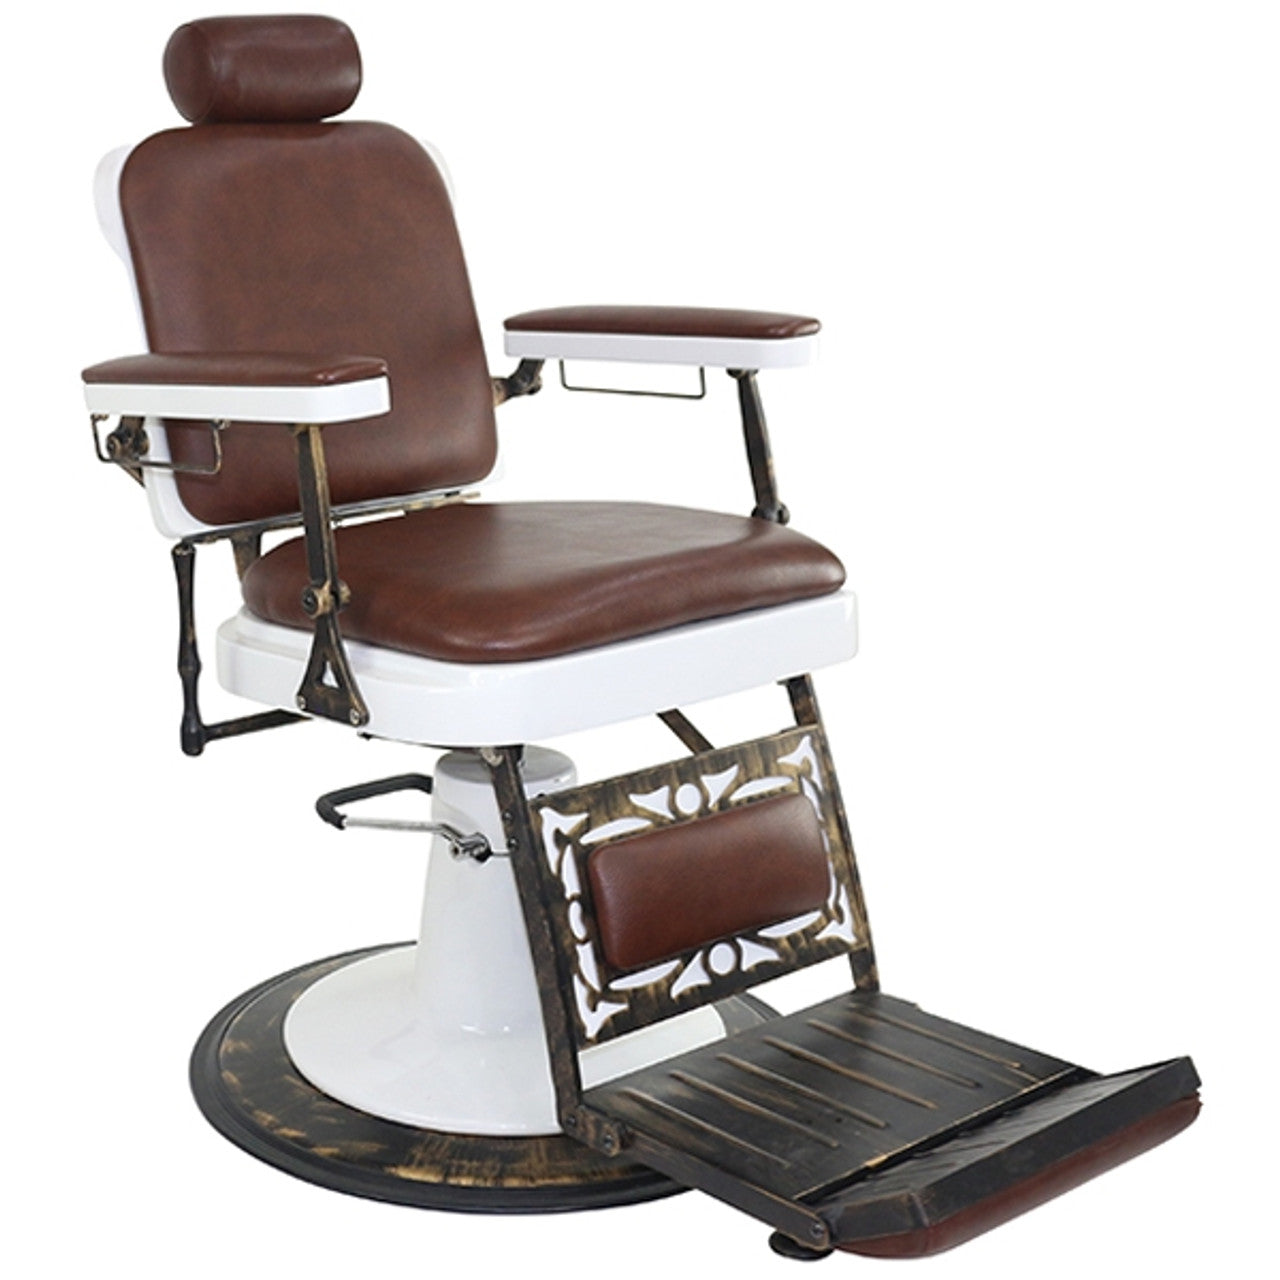 Joiken Chicago Barber Chair - Brown